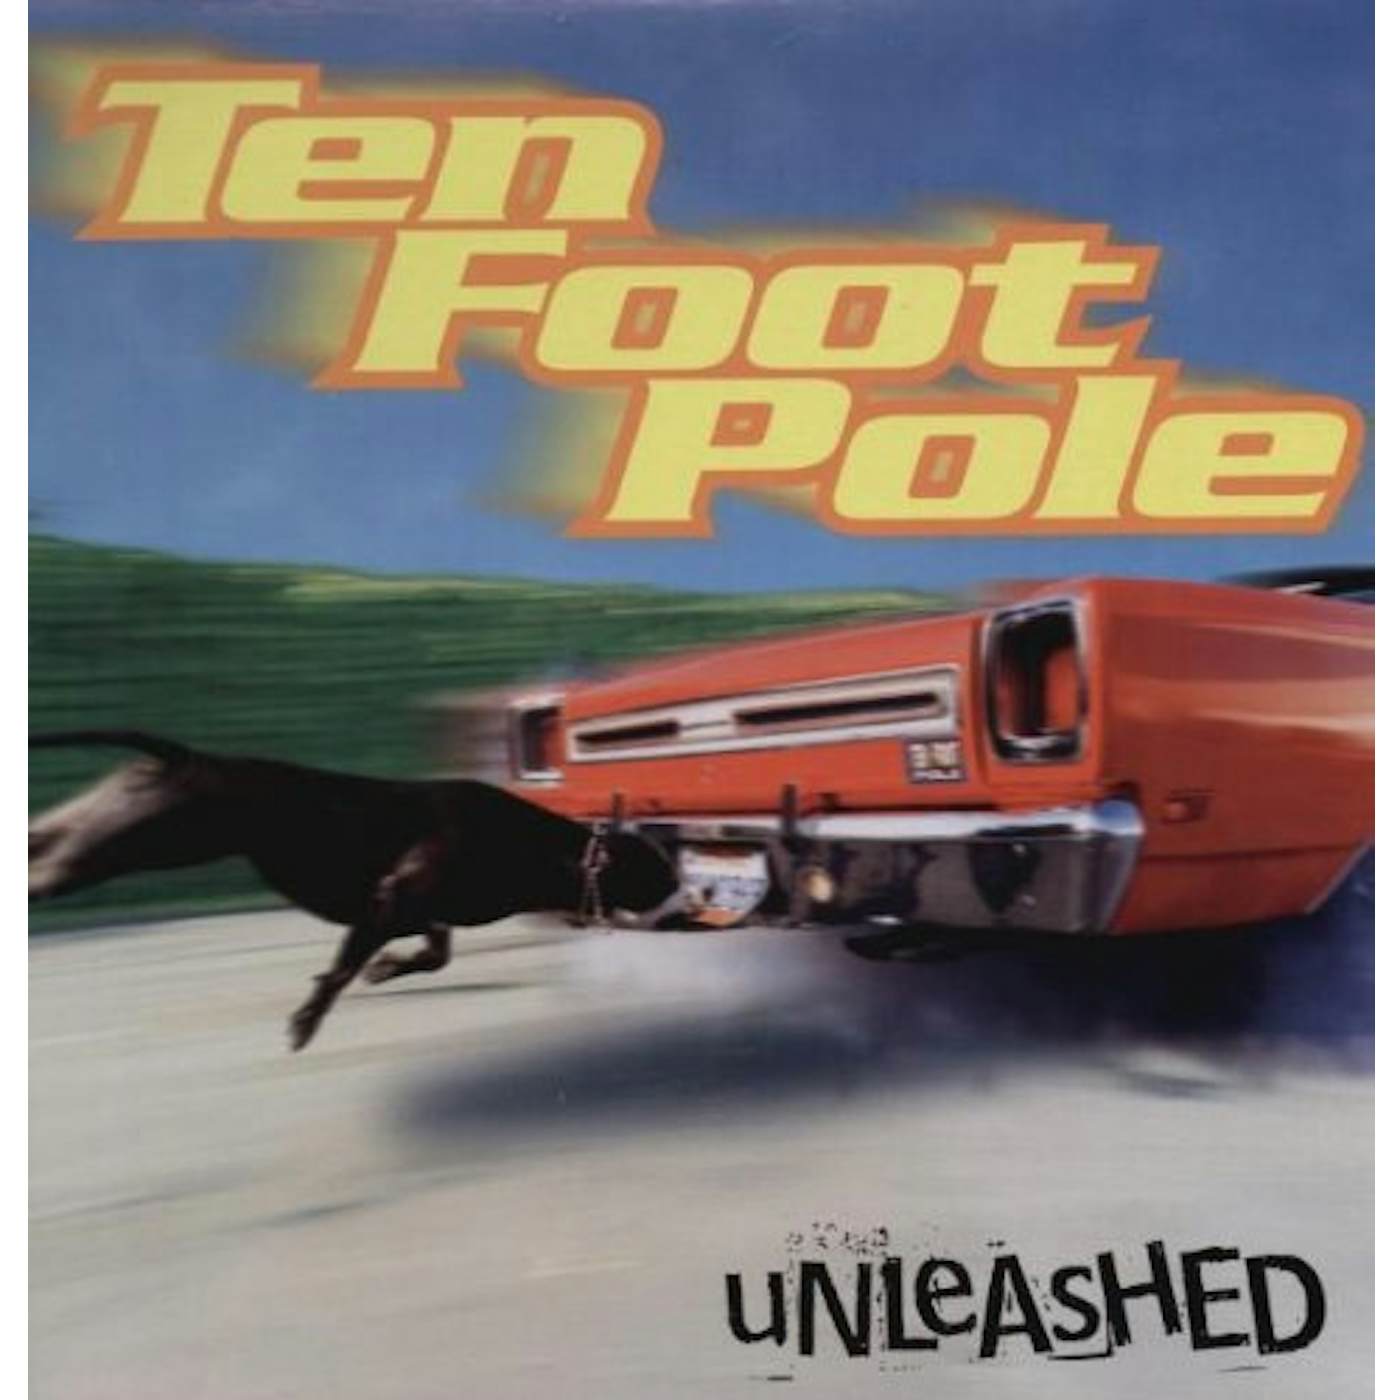 Ten Foot Pole Unleashed Vinyl Record